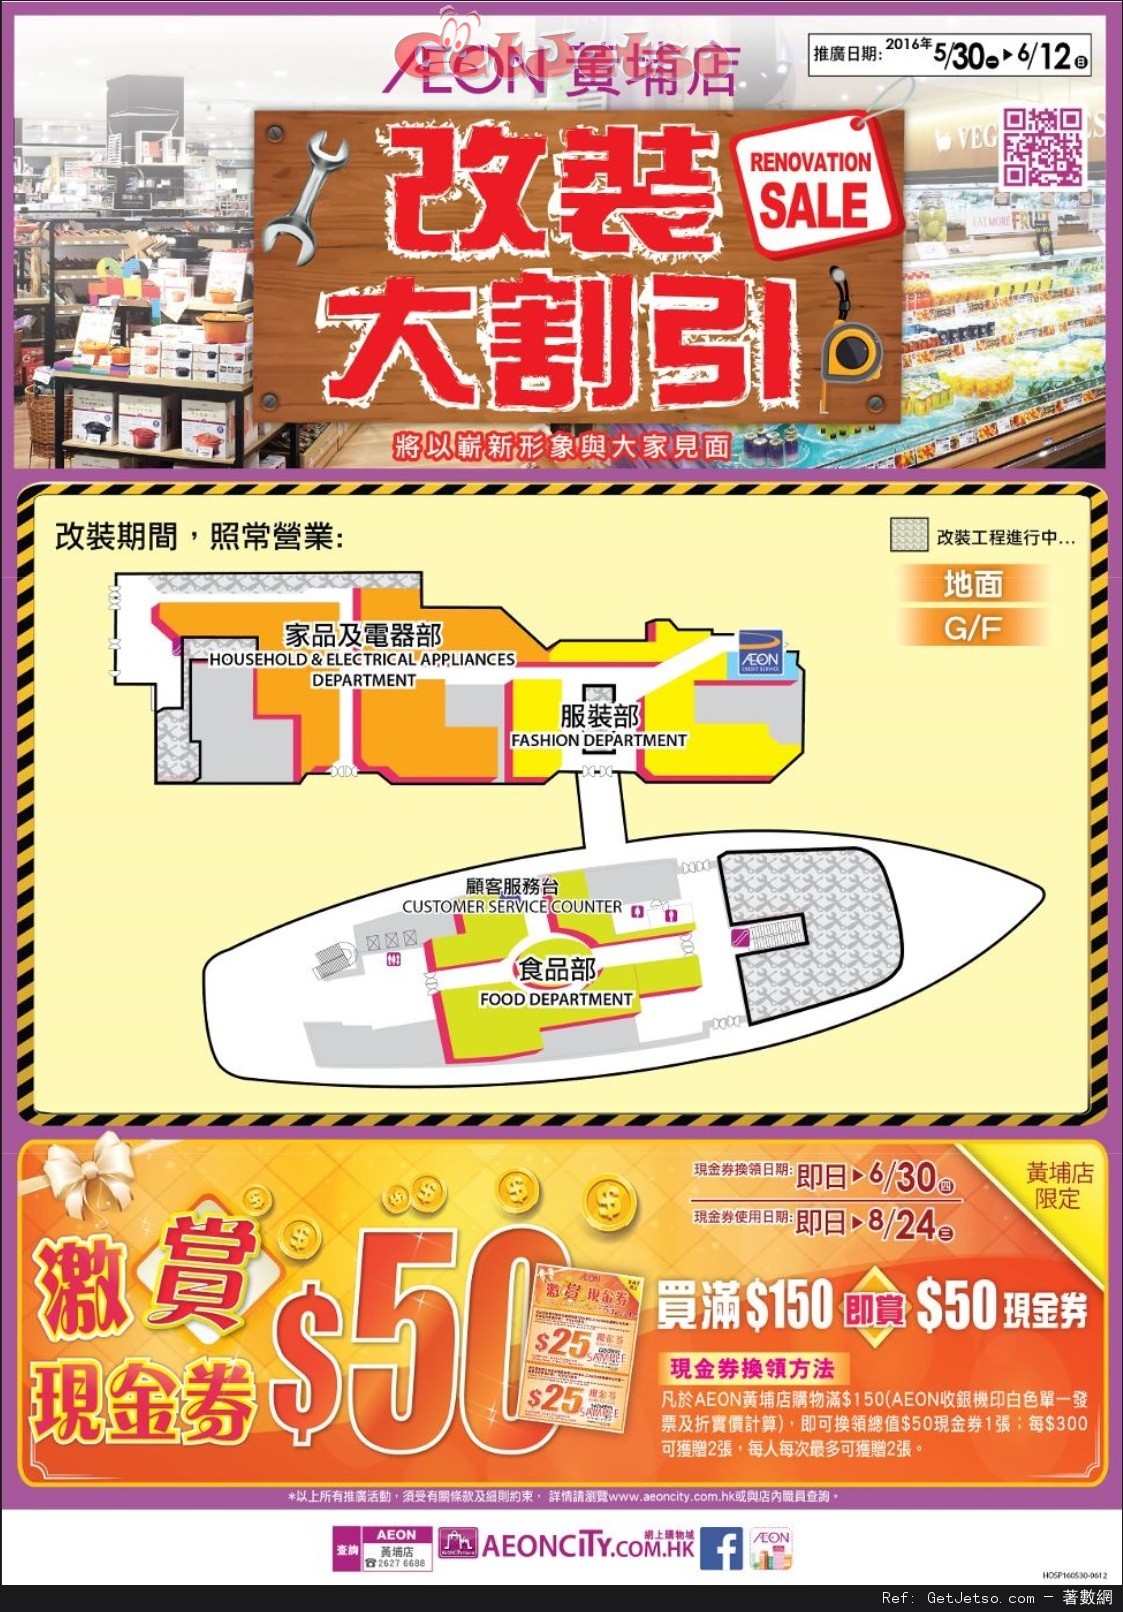 AEON 黃埔店改裝大割引購物優惠(至16年6月12日)圖片1